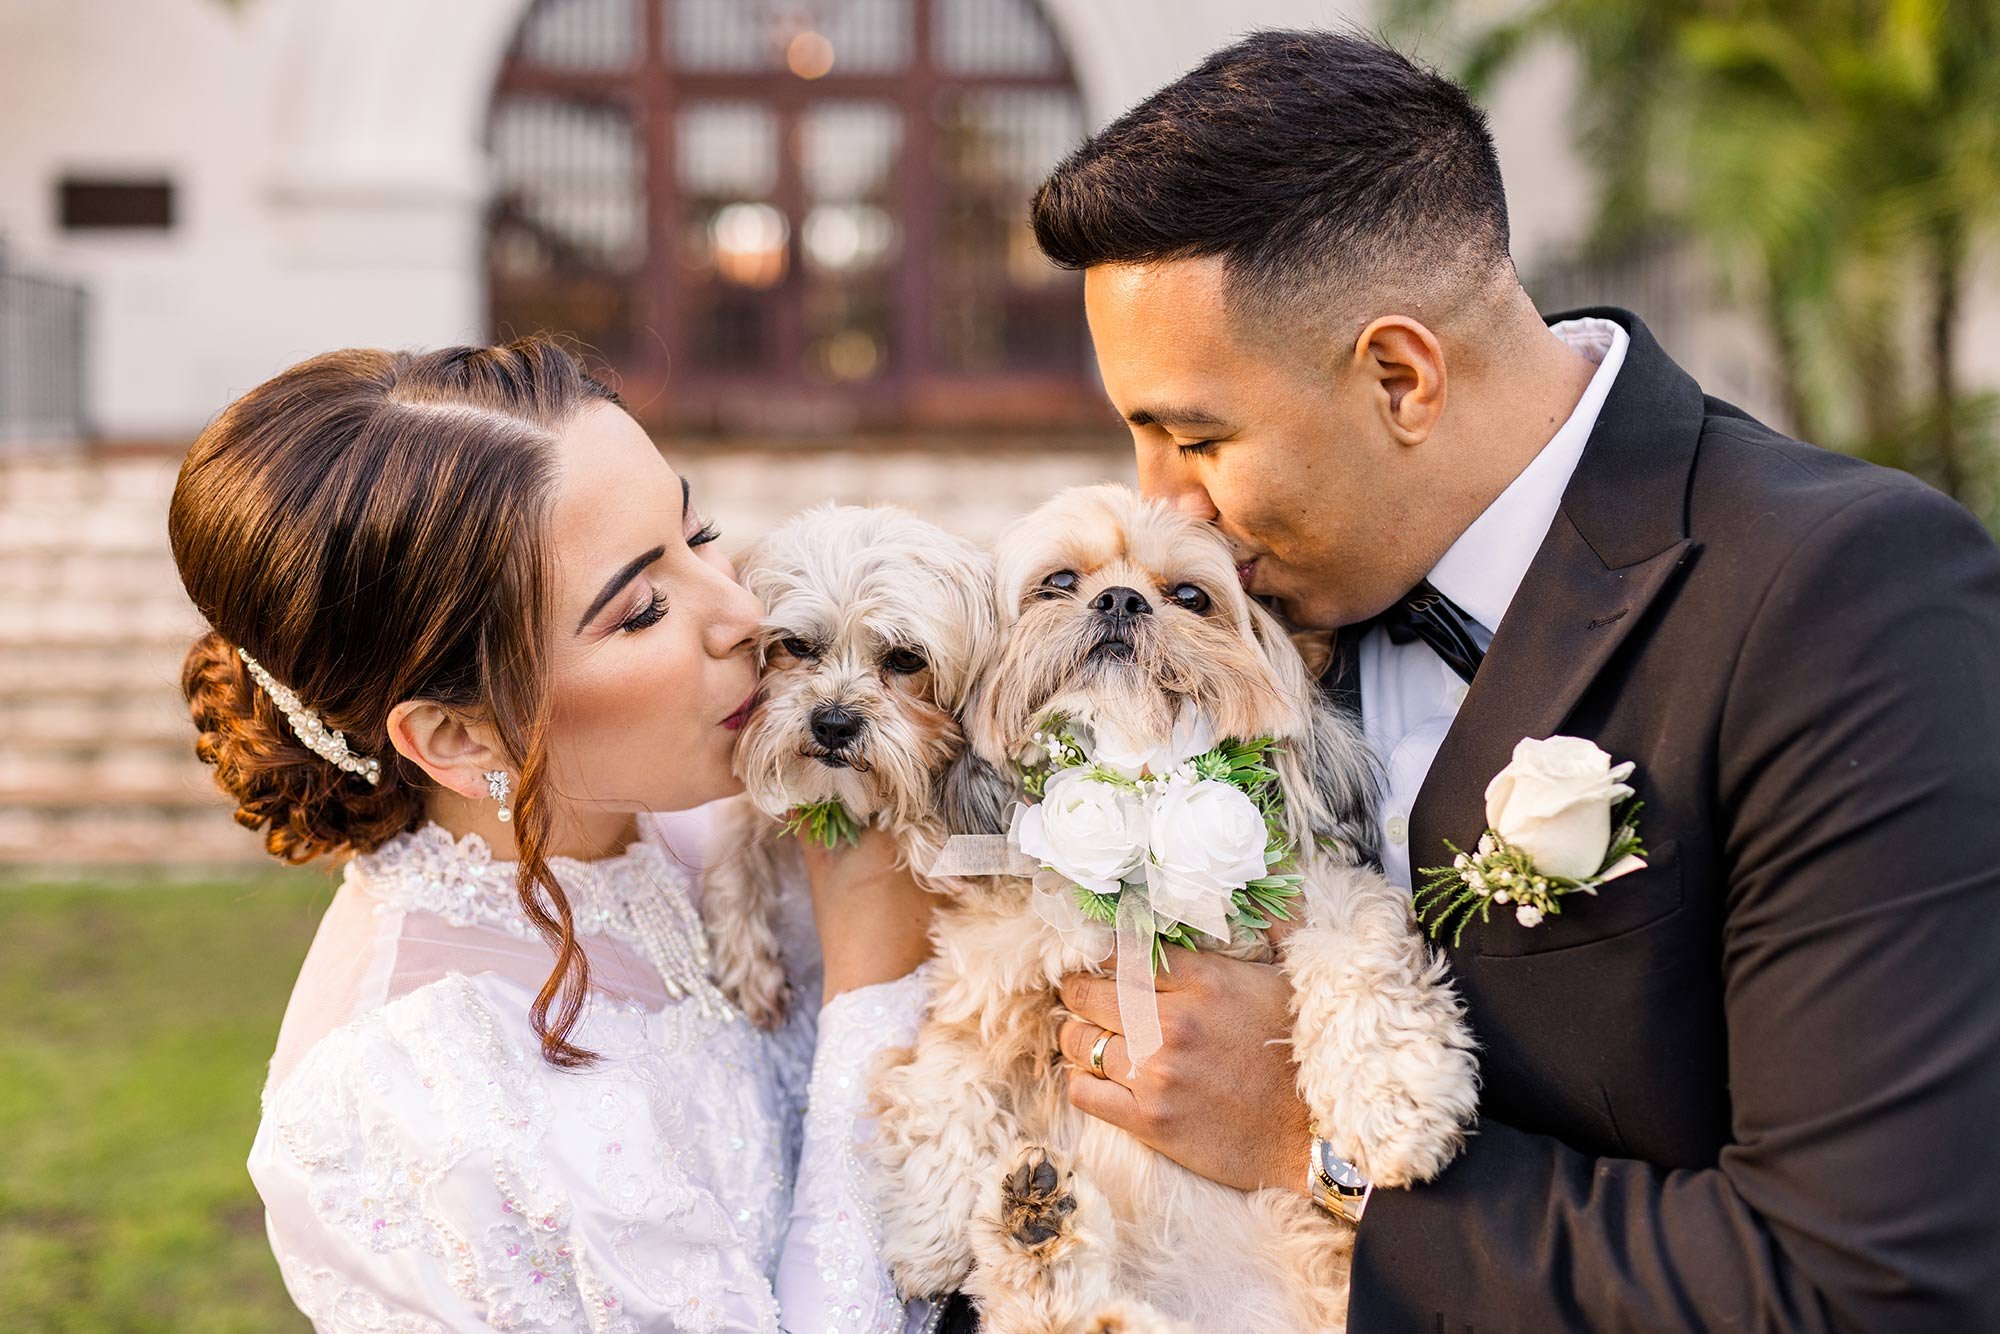 Santa Barbara Courthouse wedding photographer with dogs